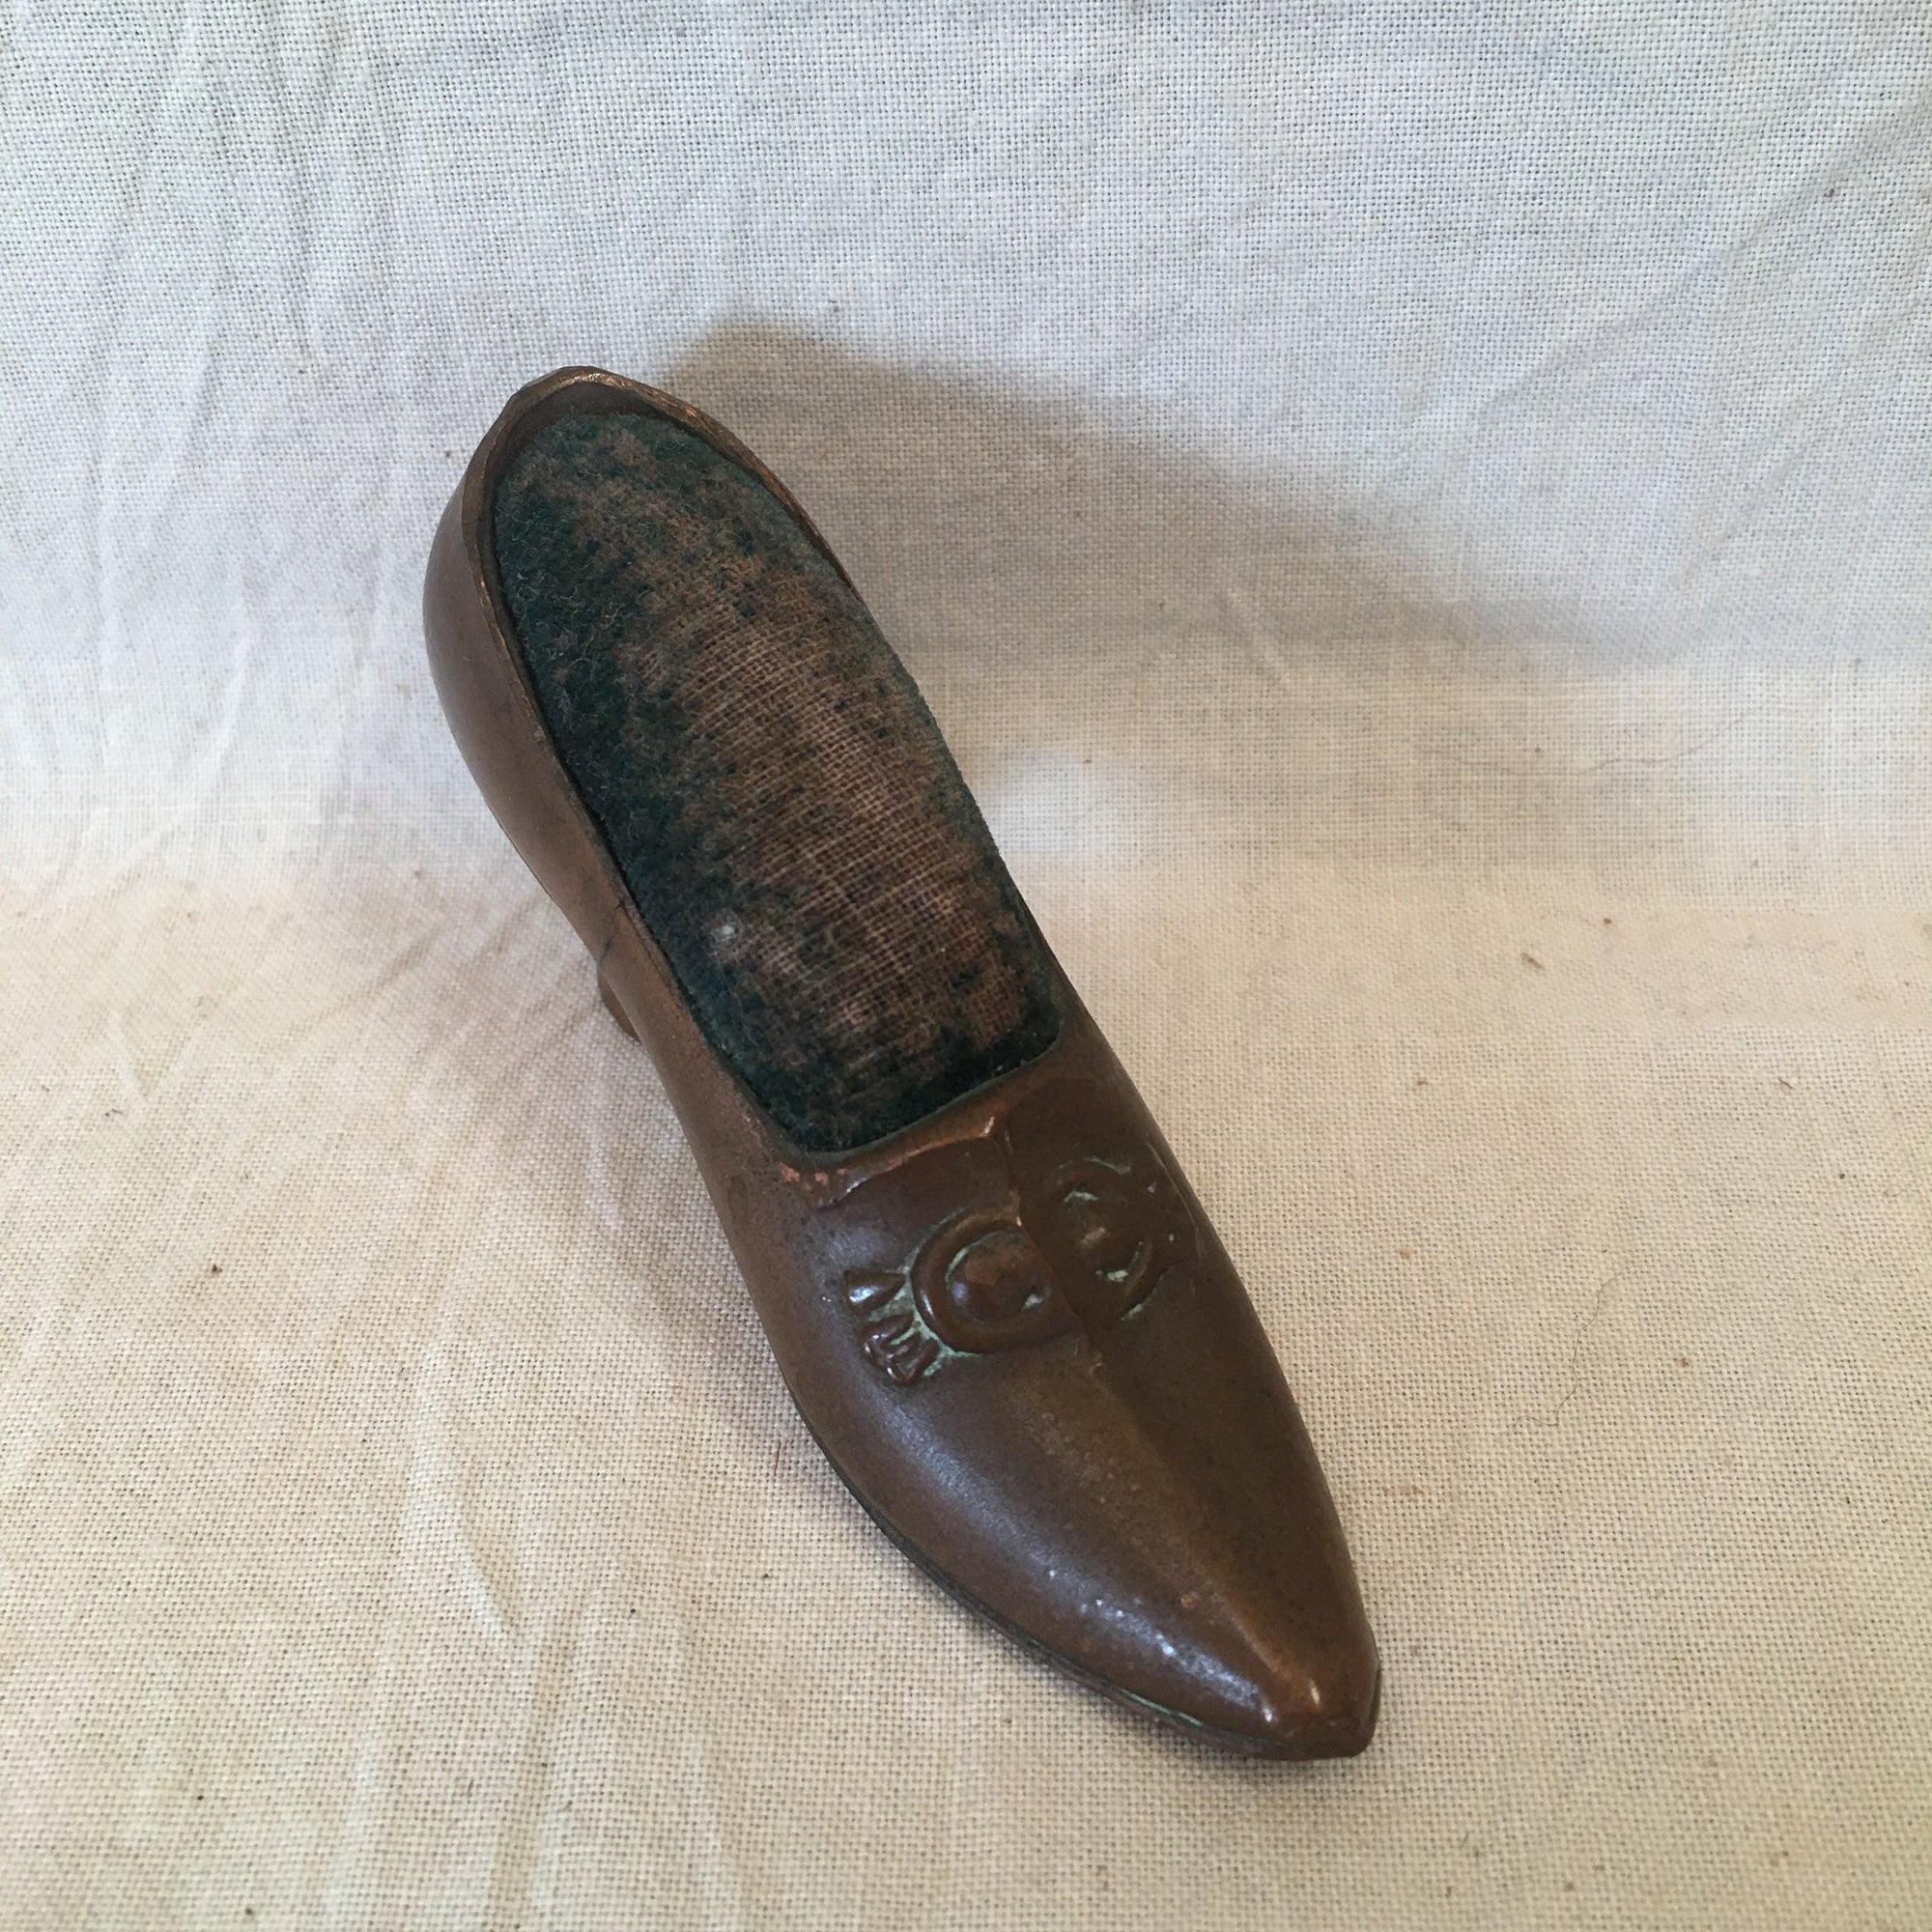 Antique Metal Shoe Pincushion